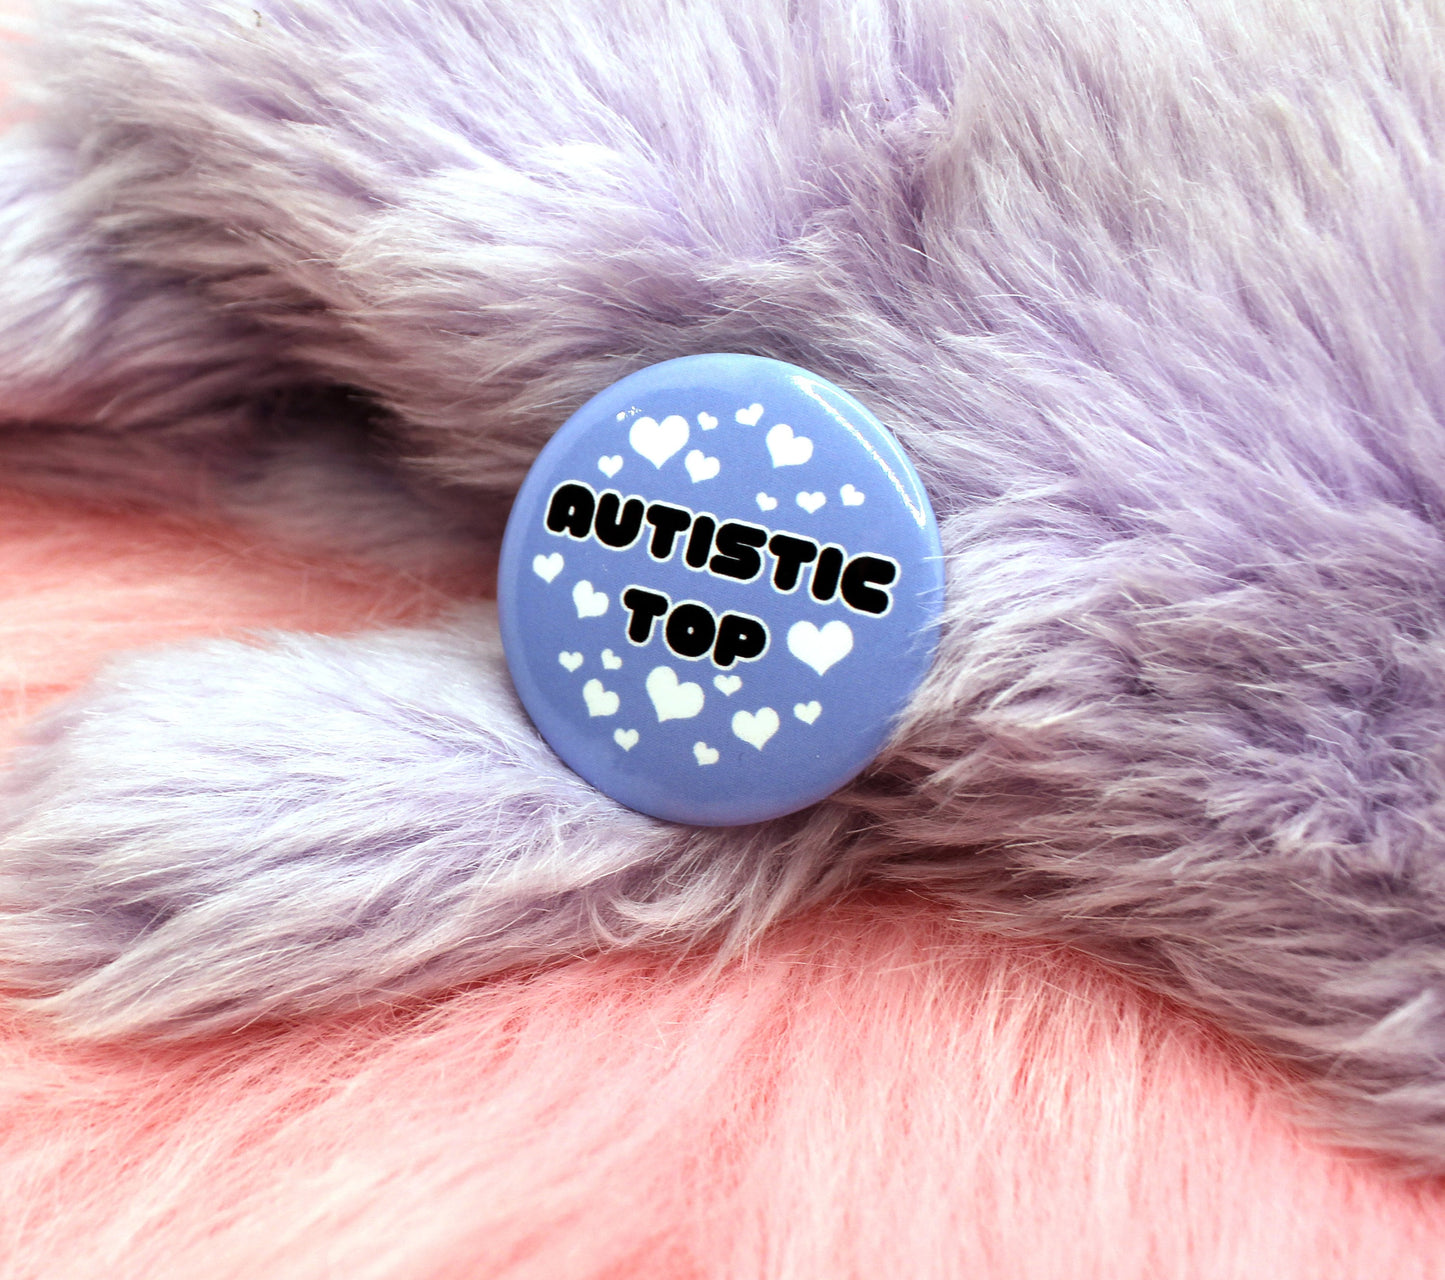 Autistic Top Badge (38mm)